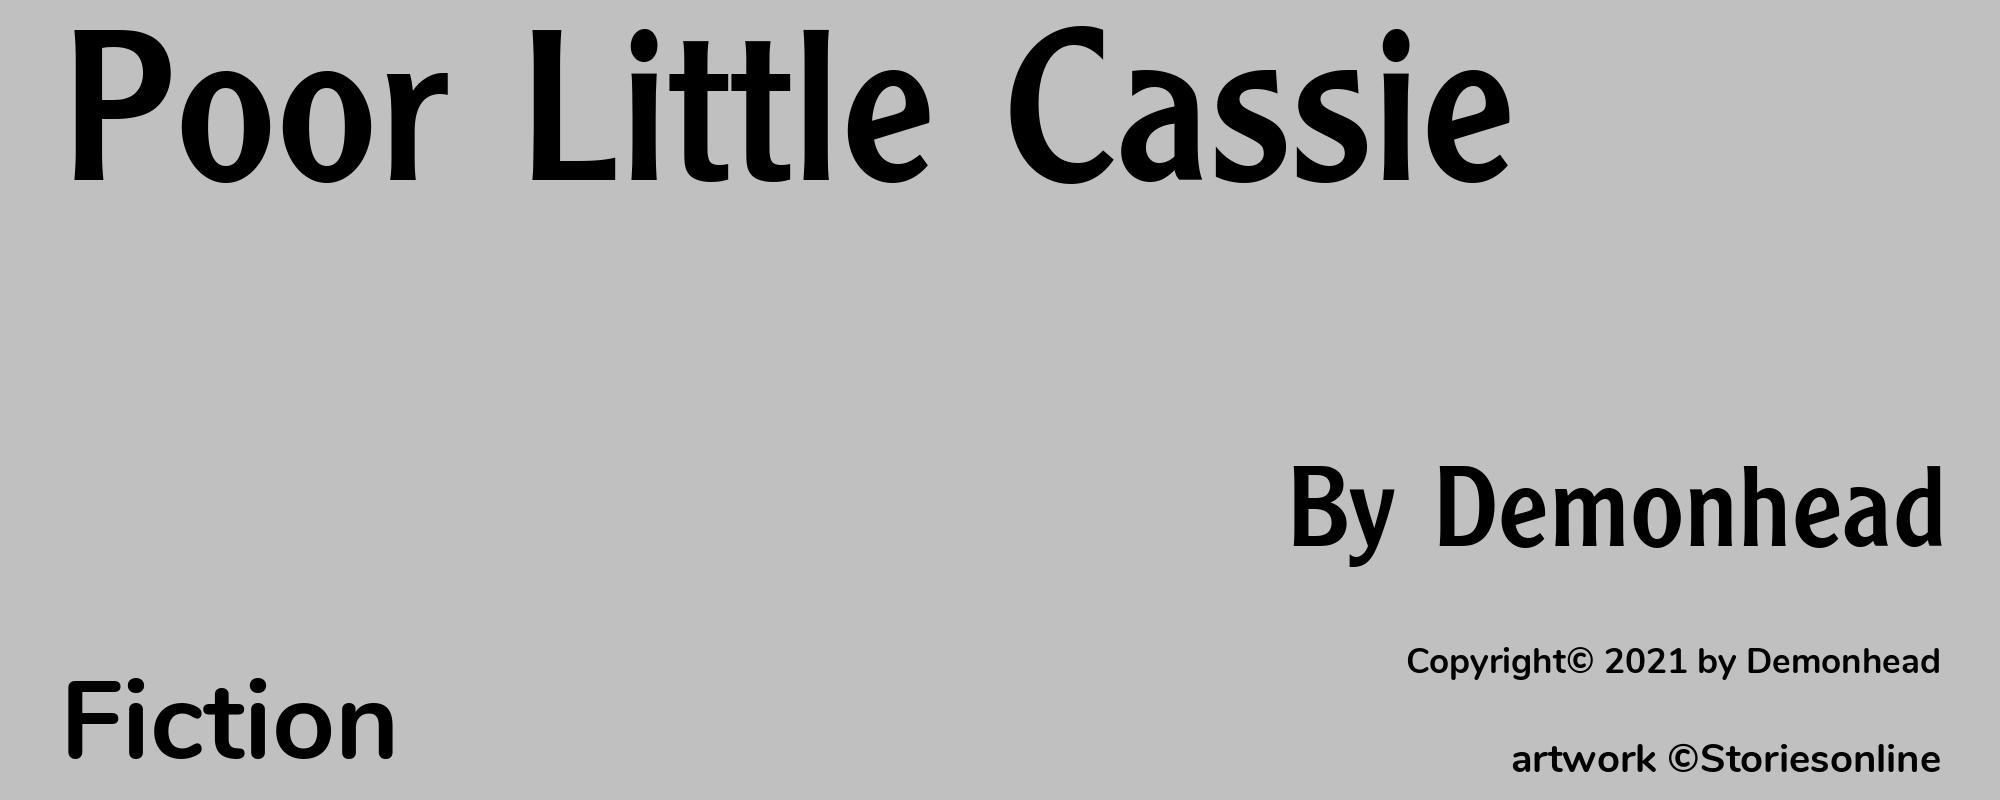 Poor Little Cassie - Cover